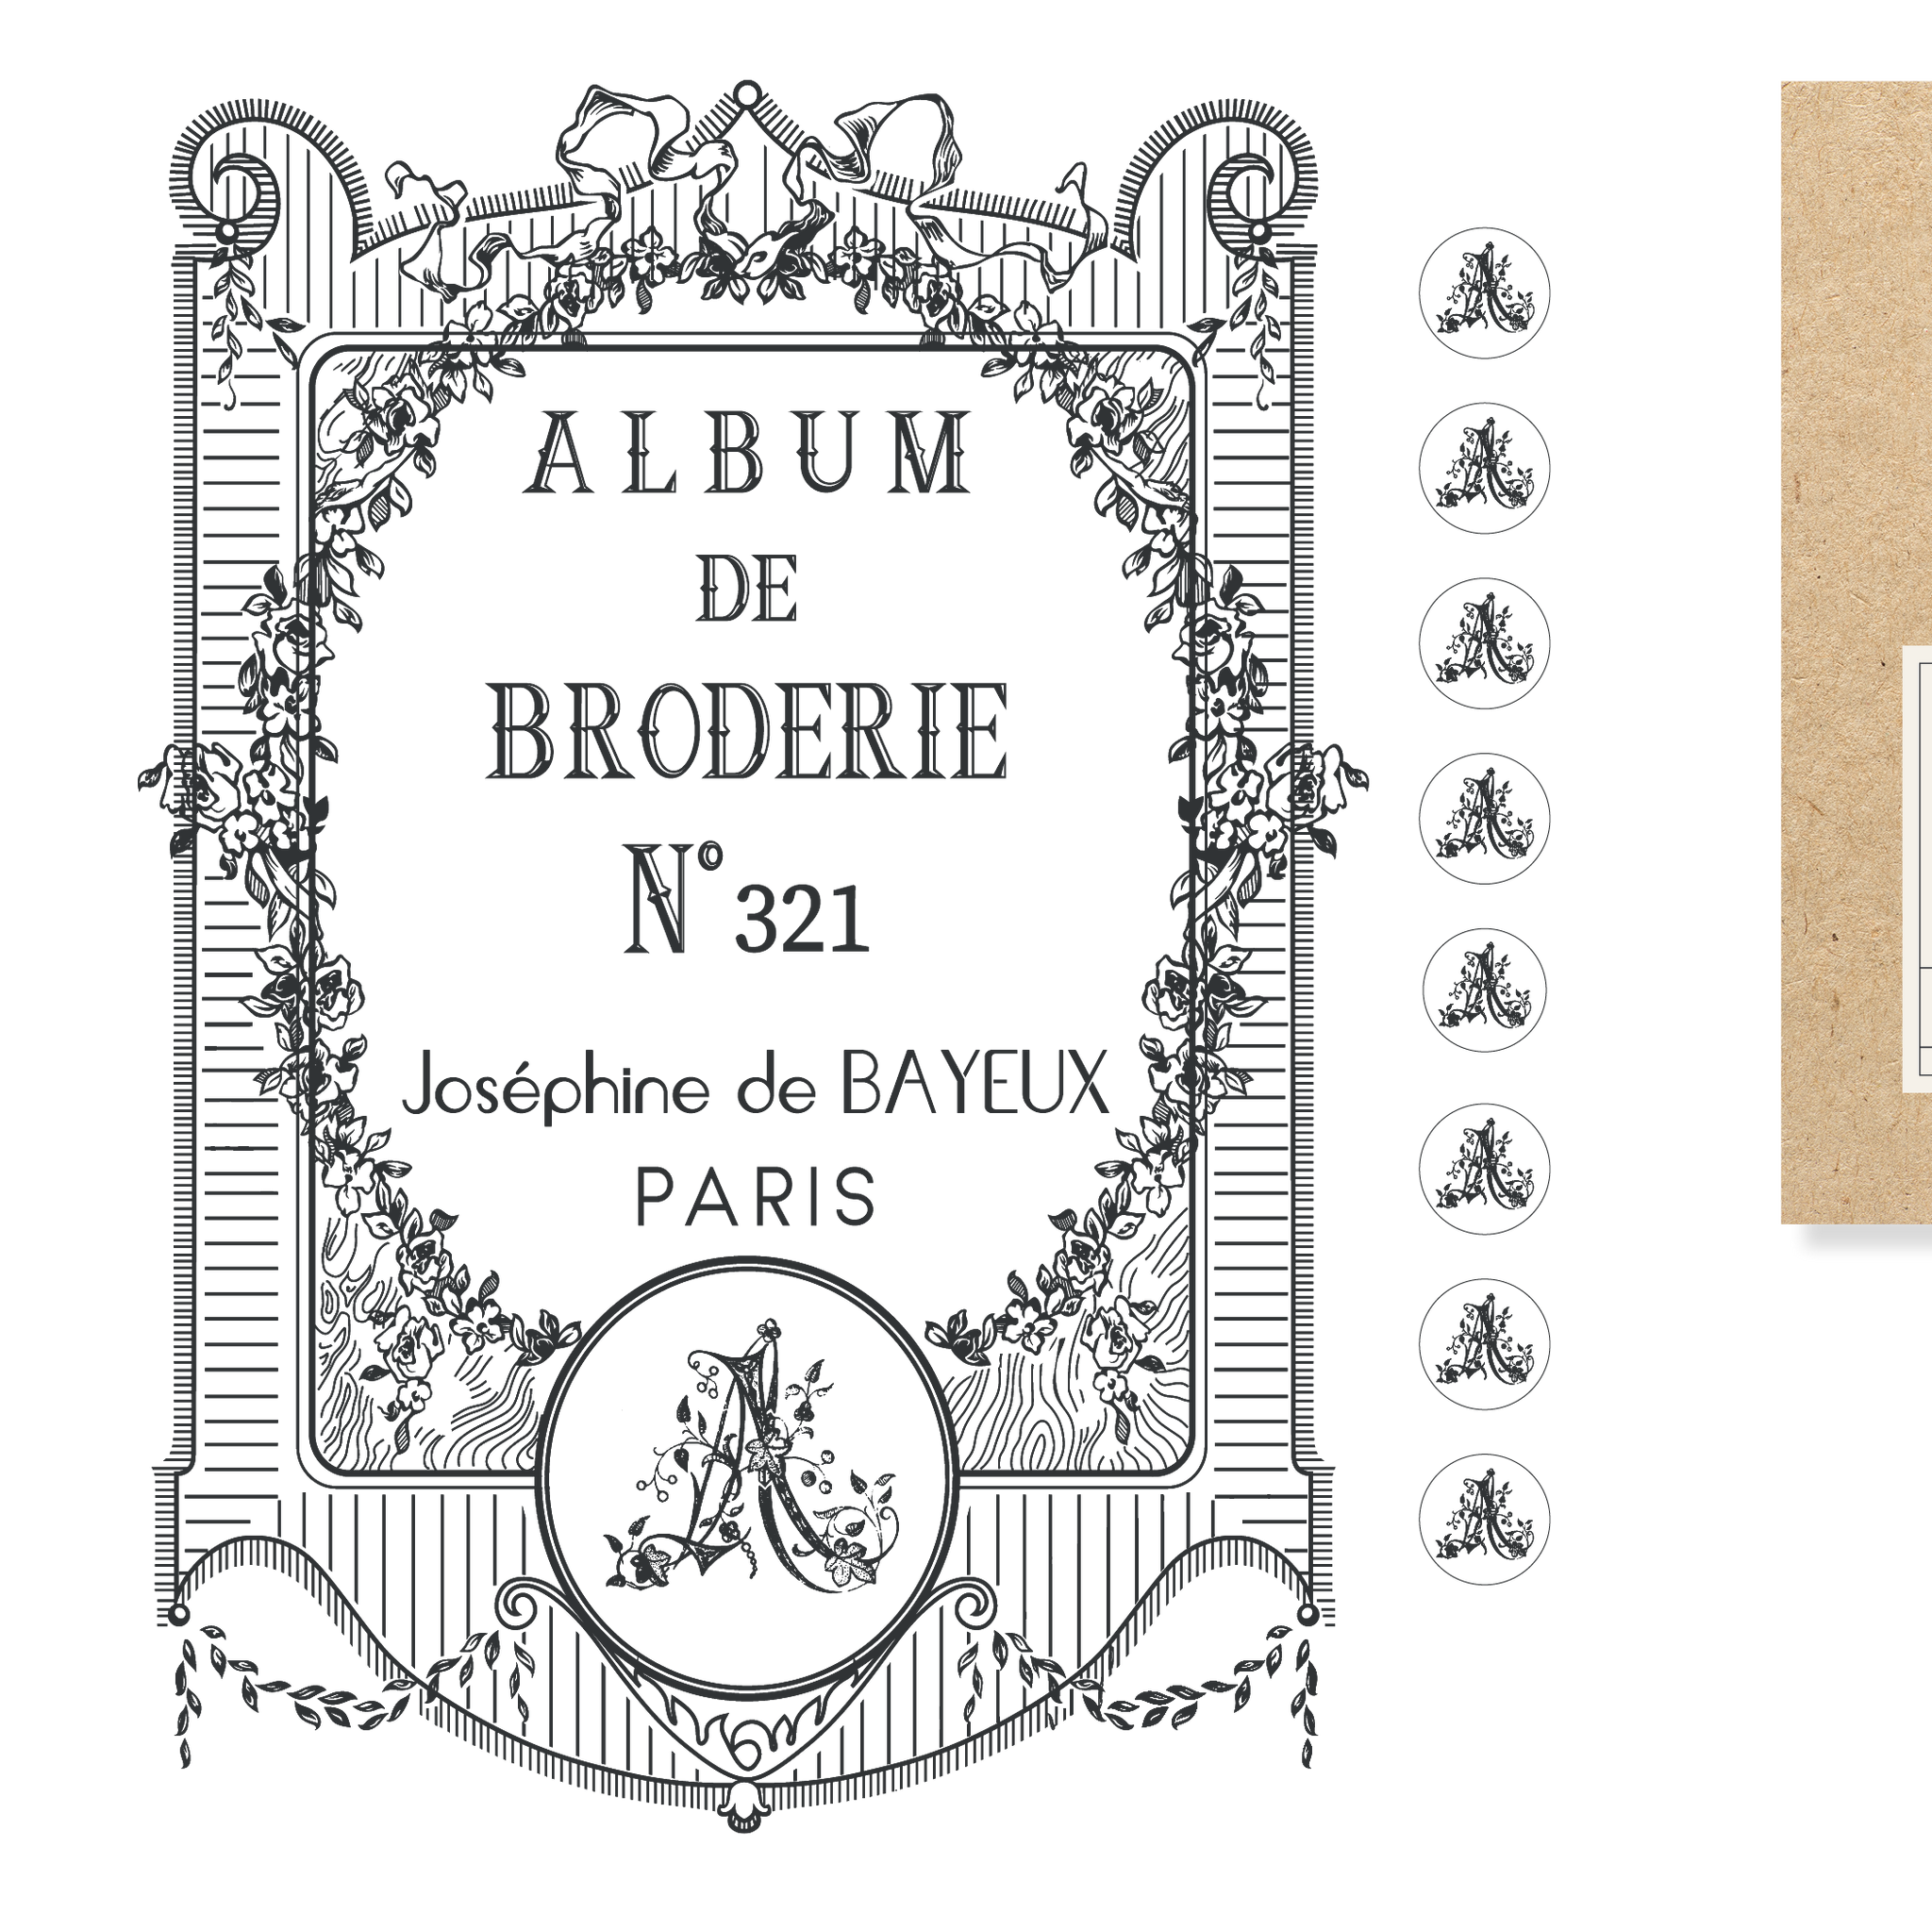 004 - ALBUM DE BRODERIE / EMBROIDERY ALBUM